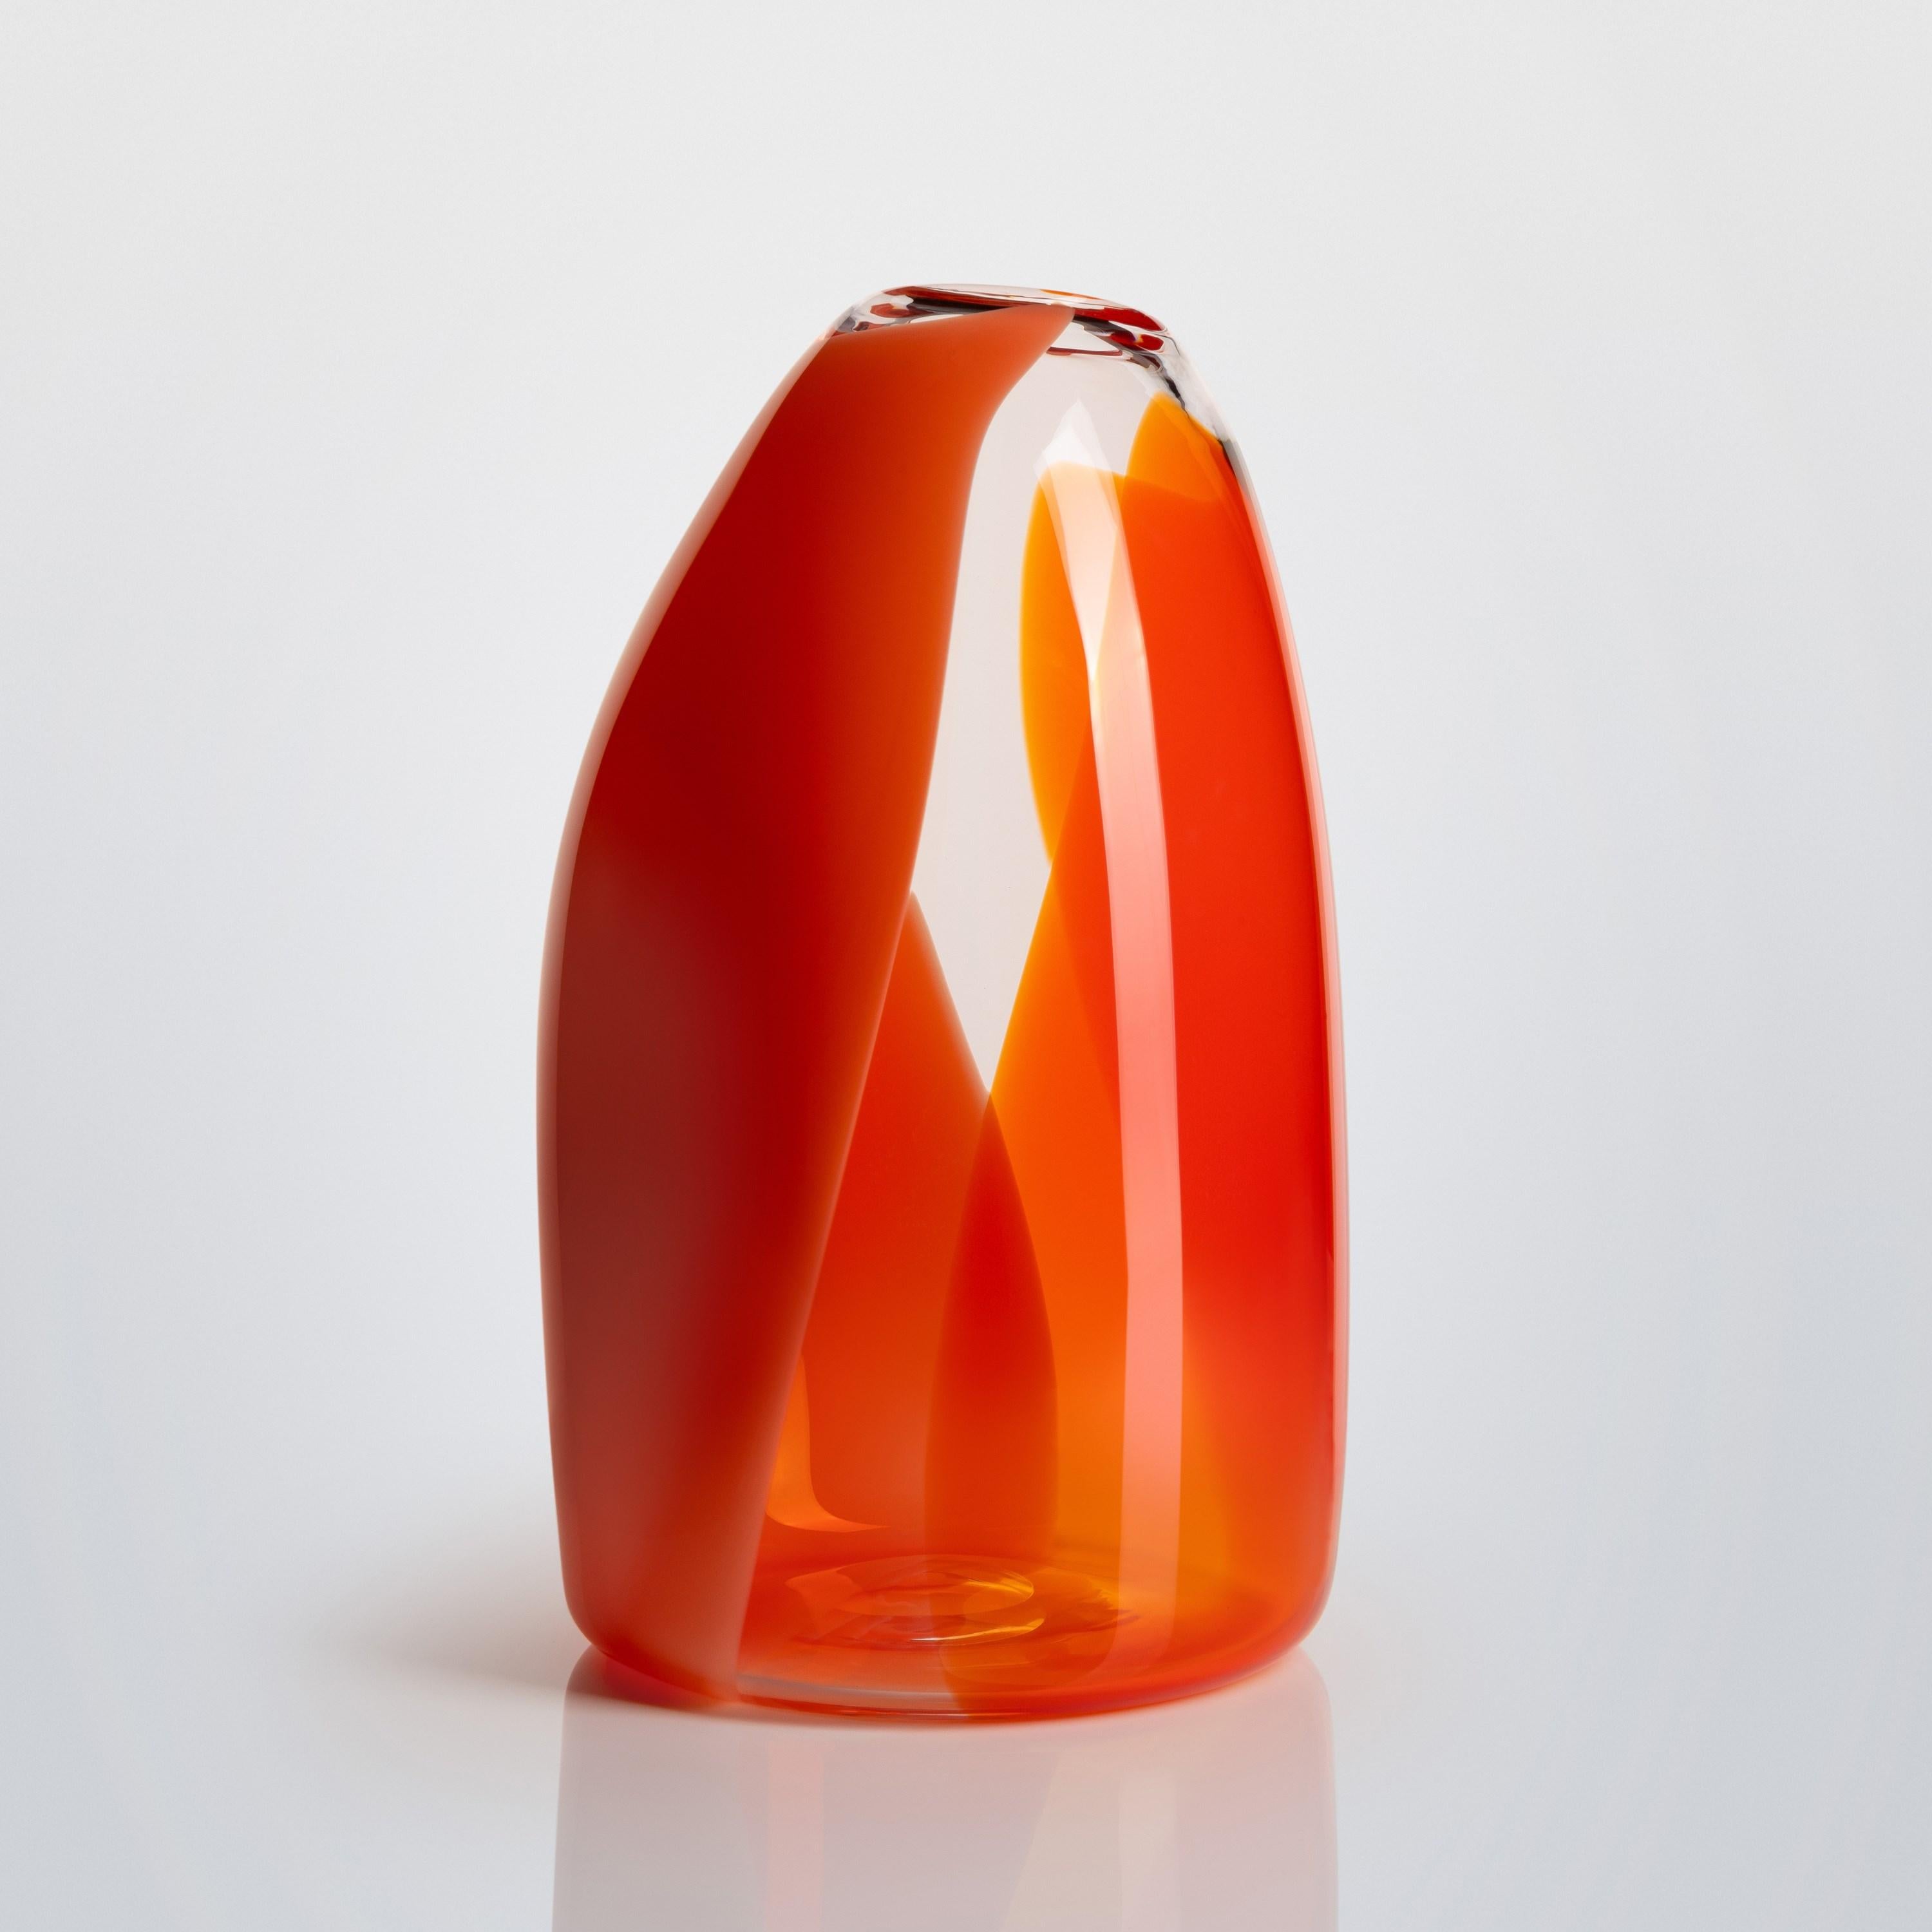 Organic Modern Waves No 487, clear, red, orange & peach hand blown glass vase by Neil Wilkin